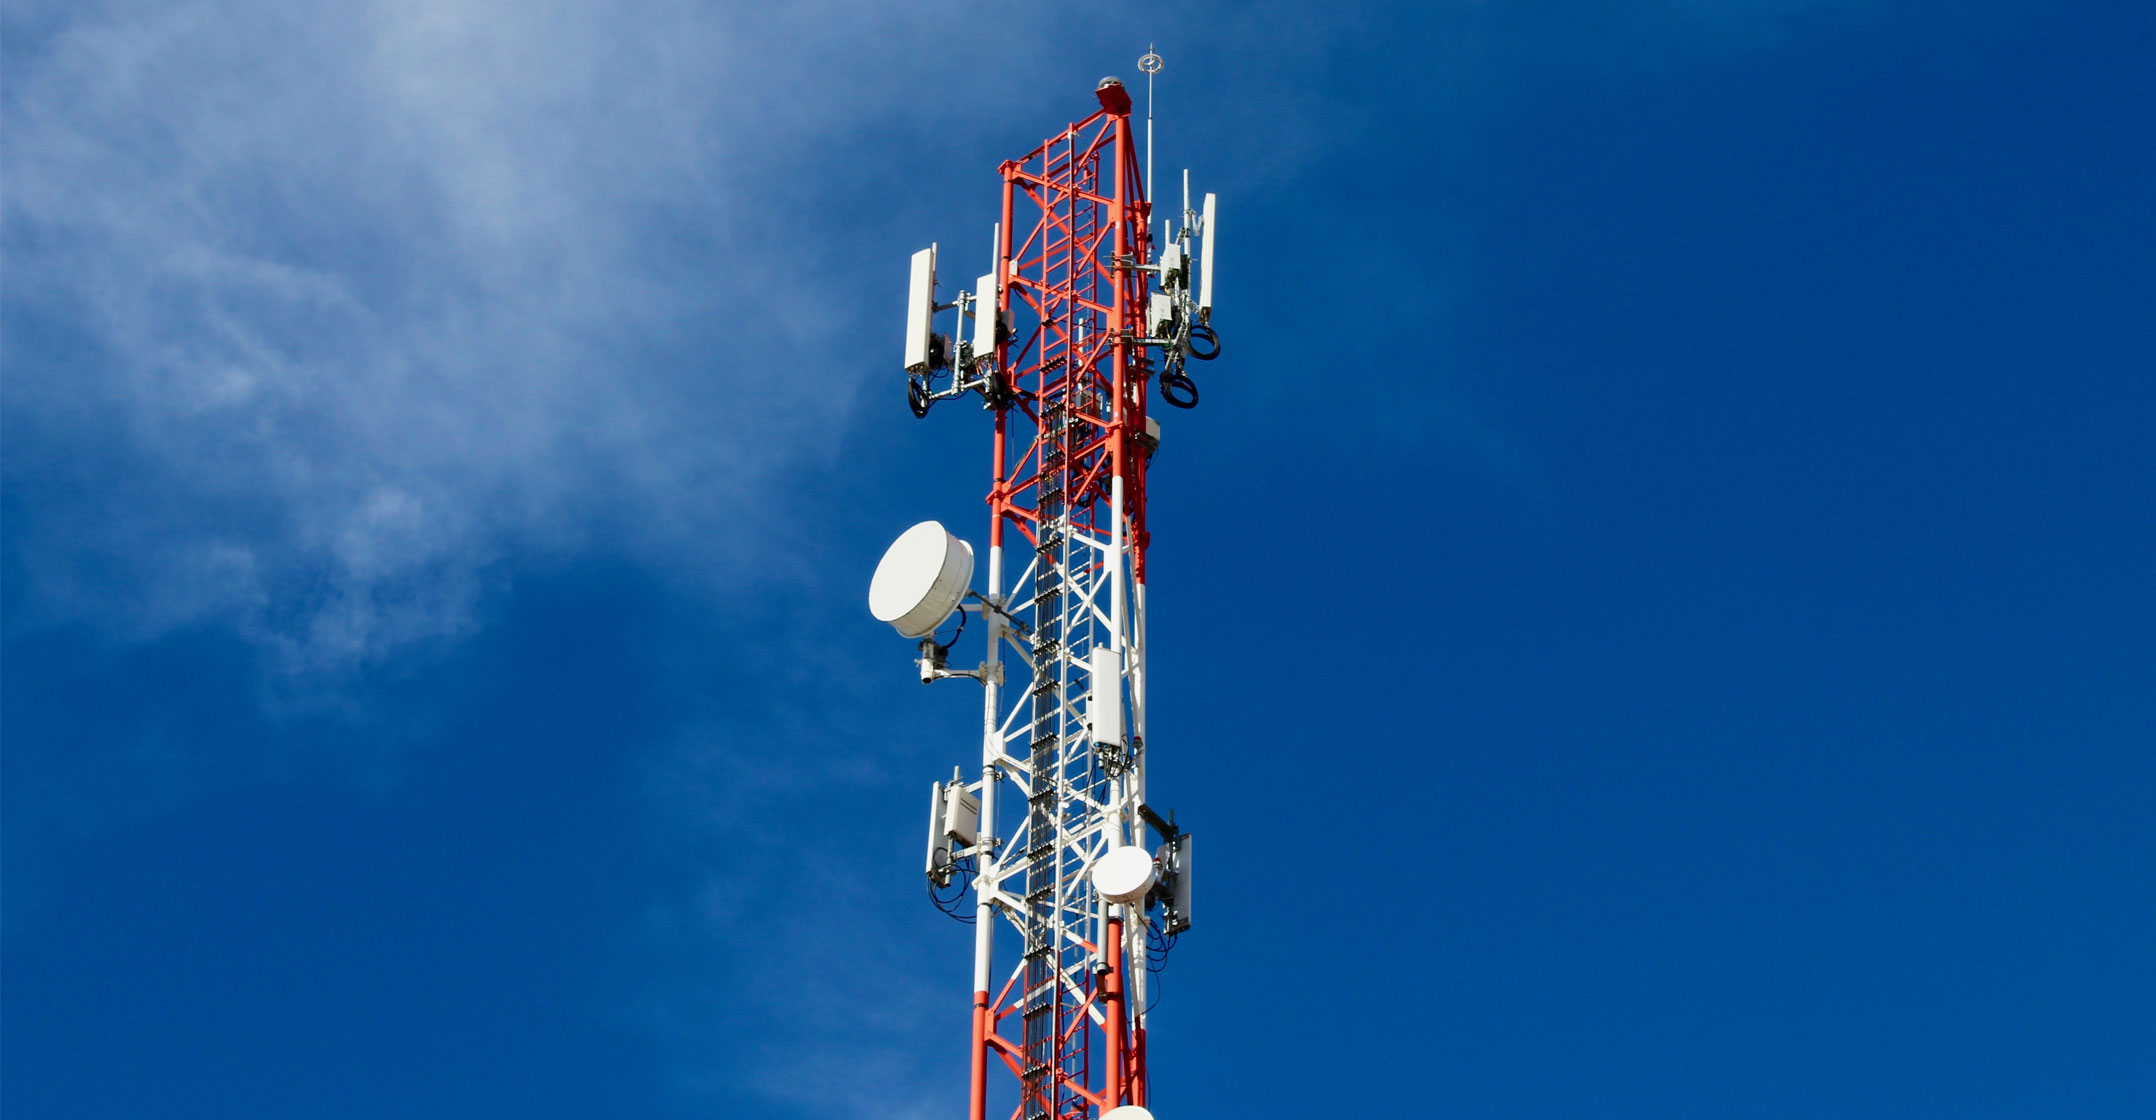 Telkom Kenya Network Outage Triggers Nationwide Communication Debacle